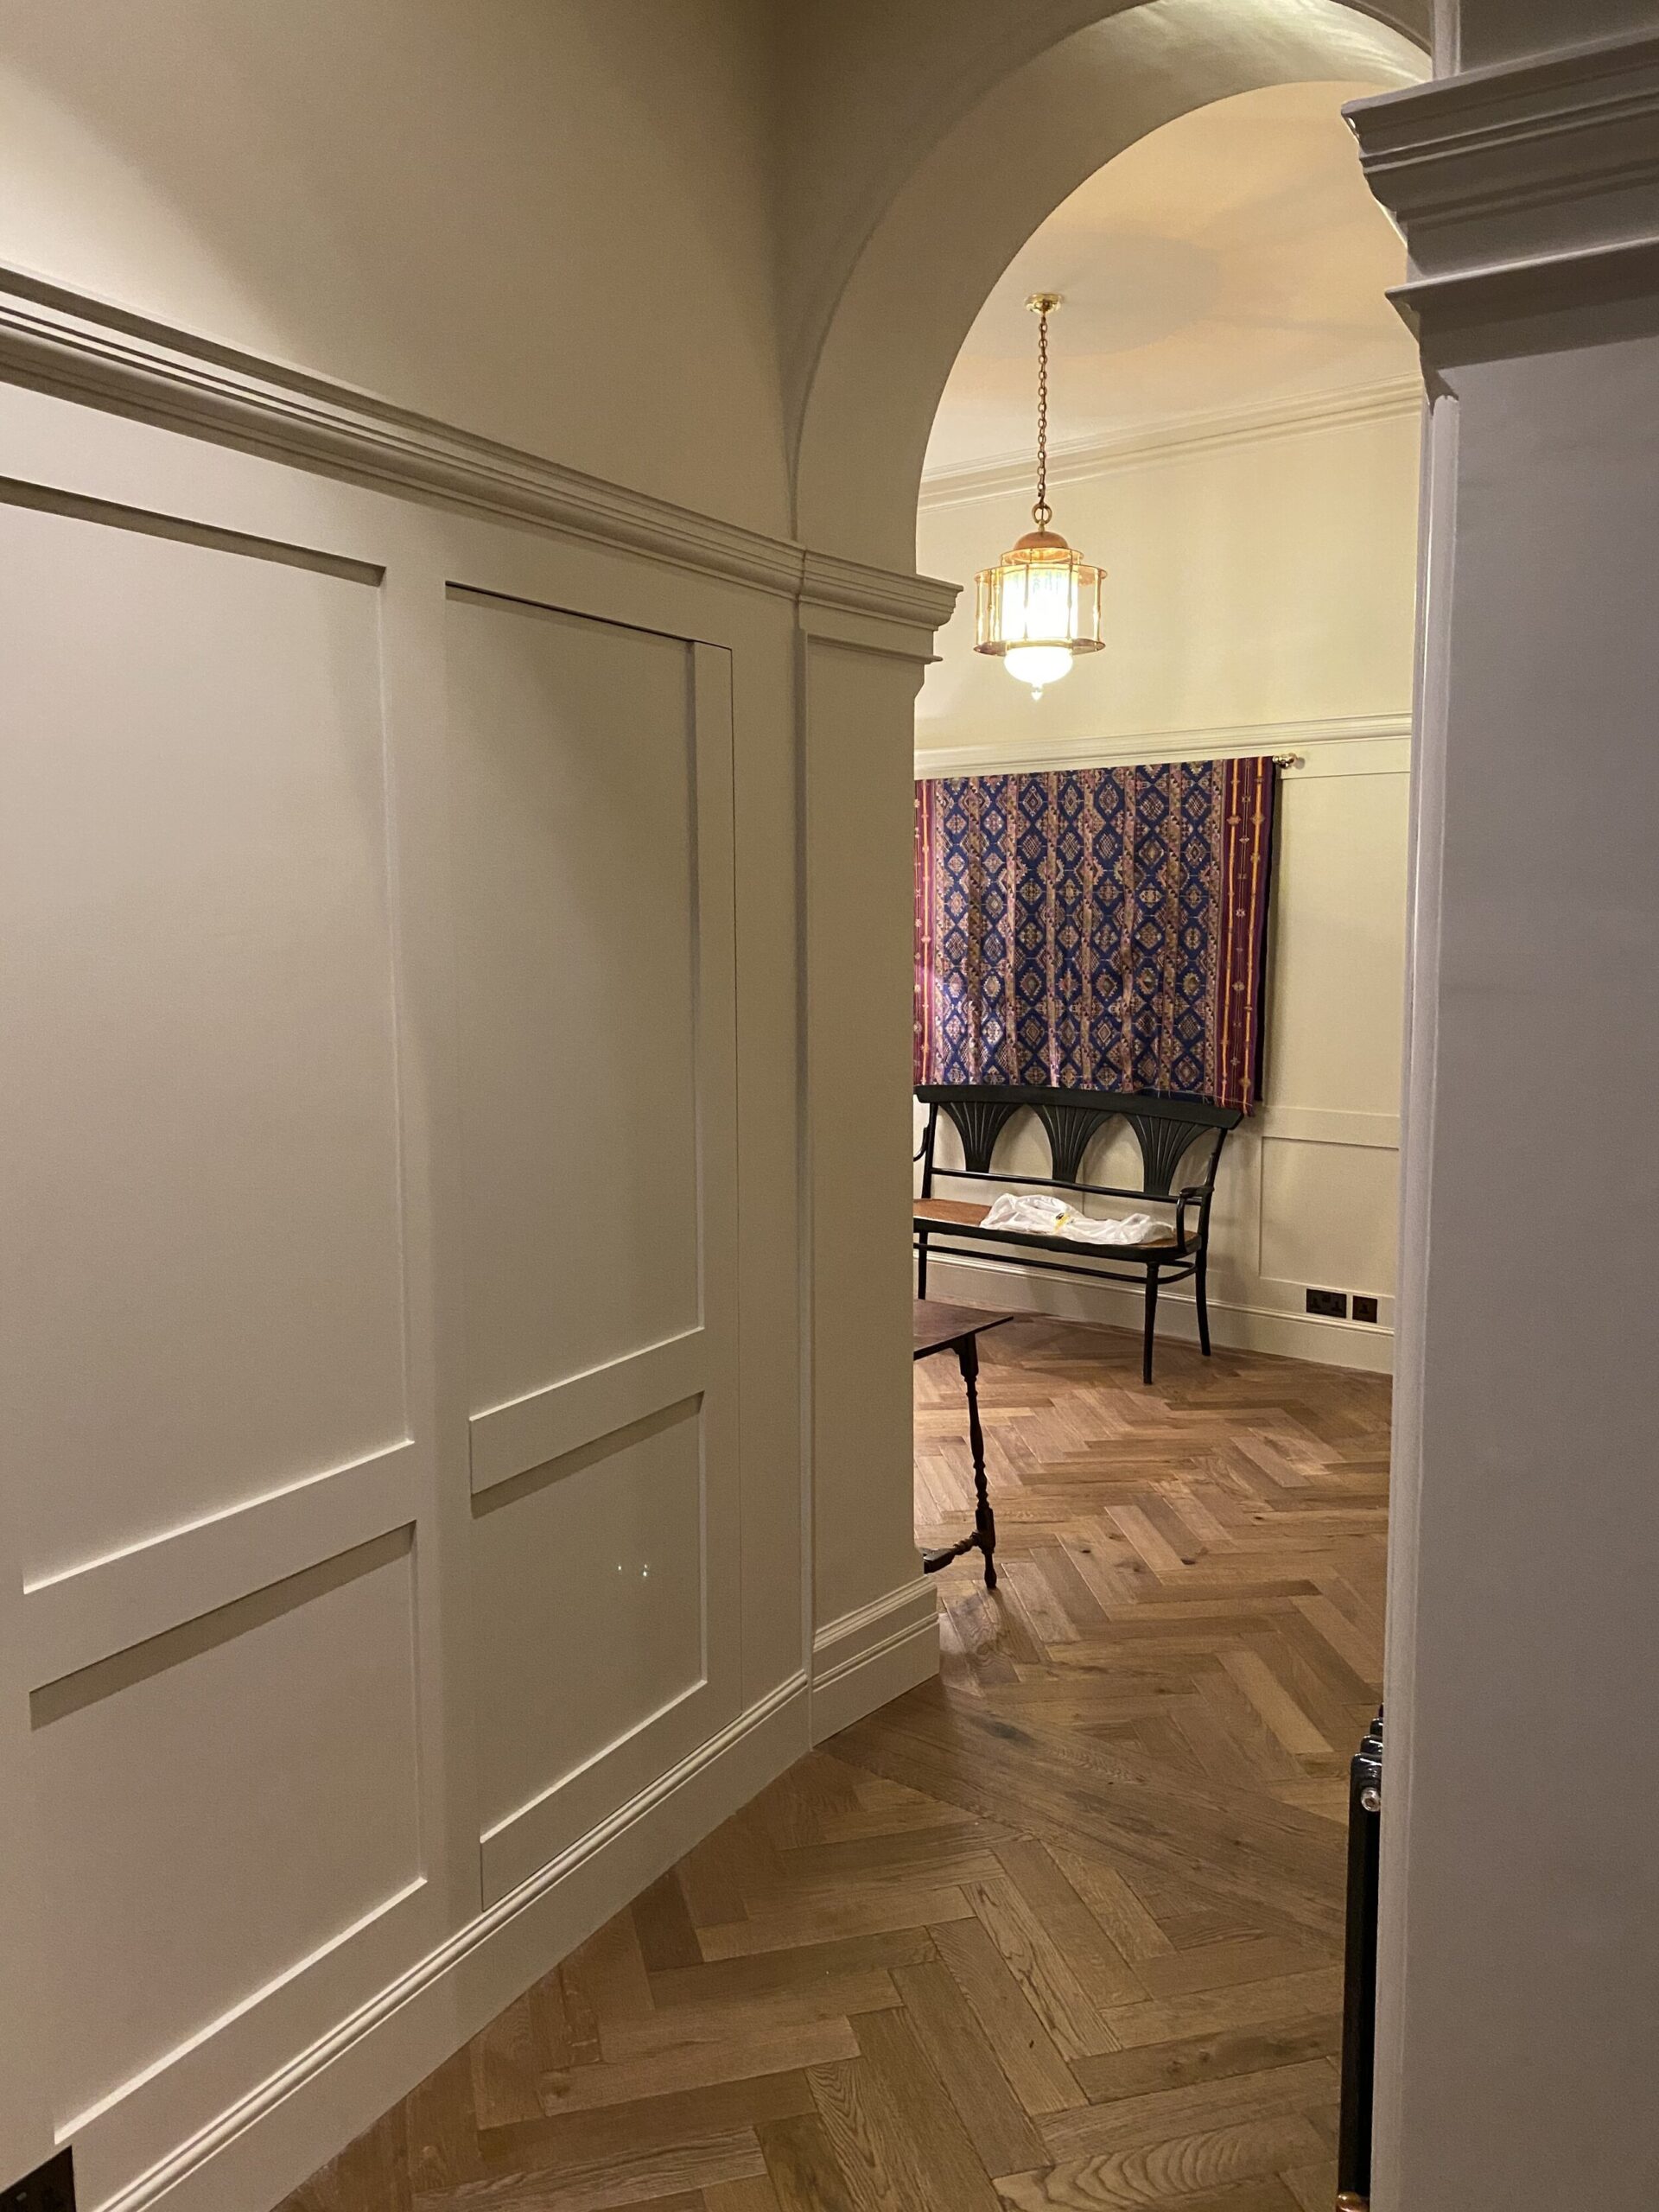 Hallway with hardwood floors and wood panelling